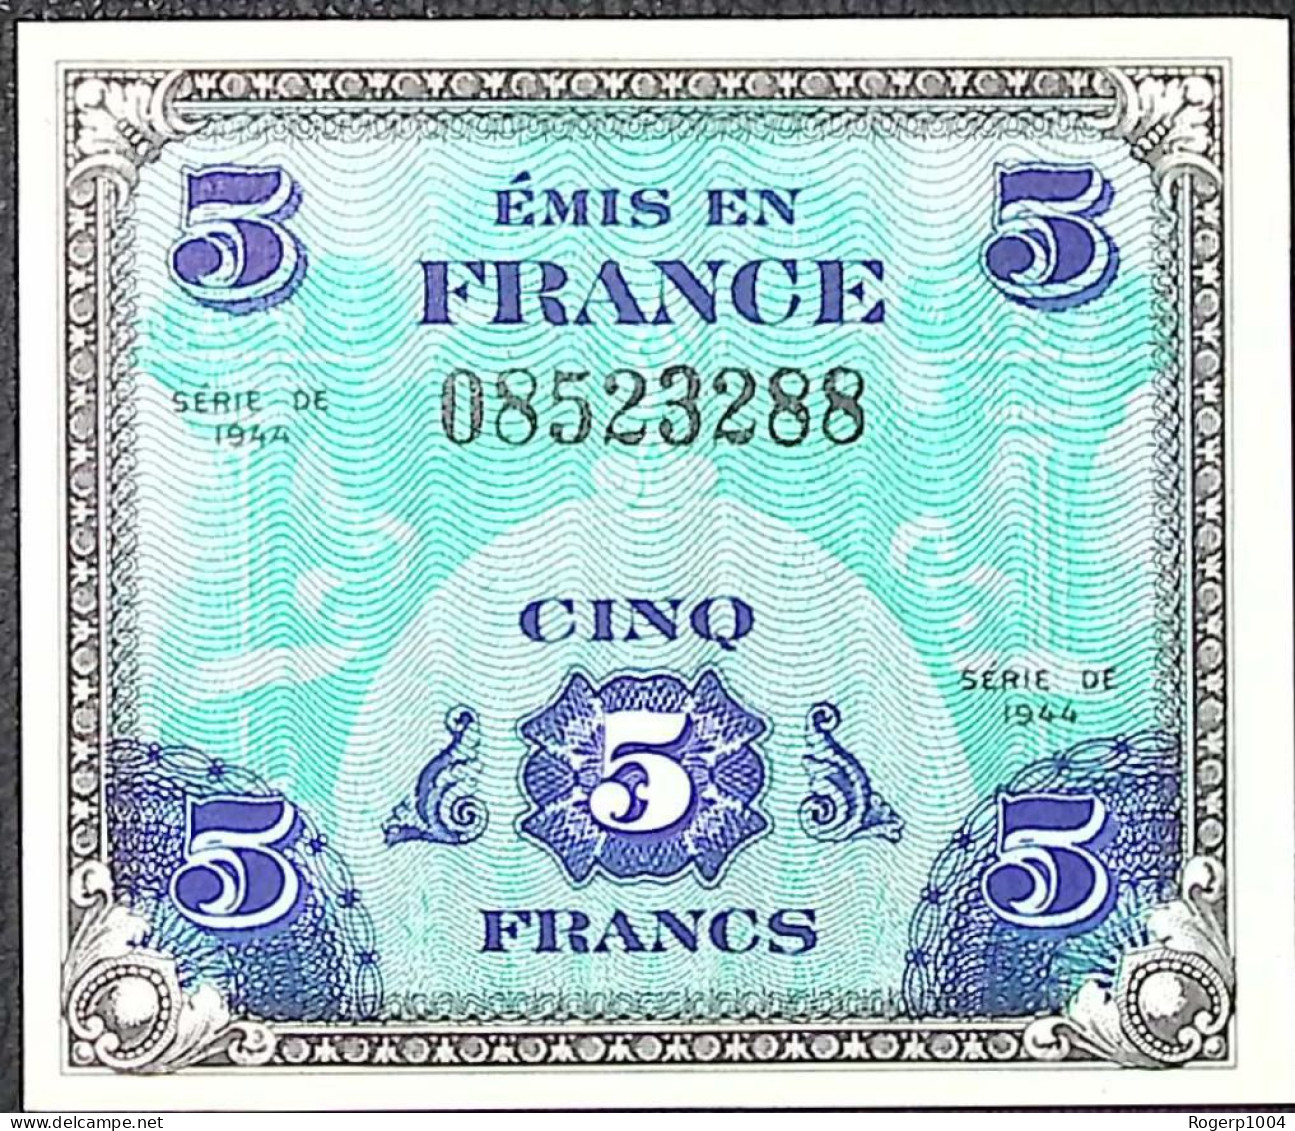 FRANCE * Billets Du Trésor * 5 Francs Drapeau * 1944 * Sans Série * Etat/Grade NEUF/UNC - 1944 Bandiera/Francia